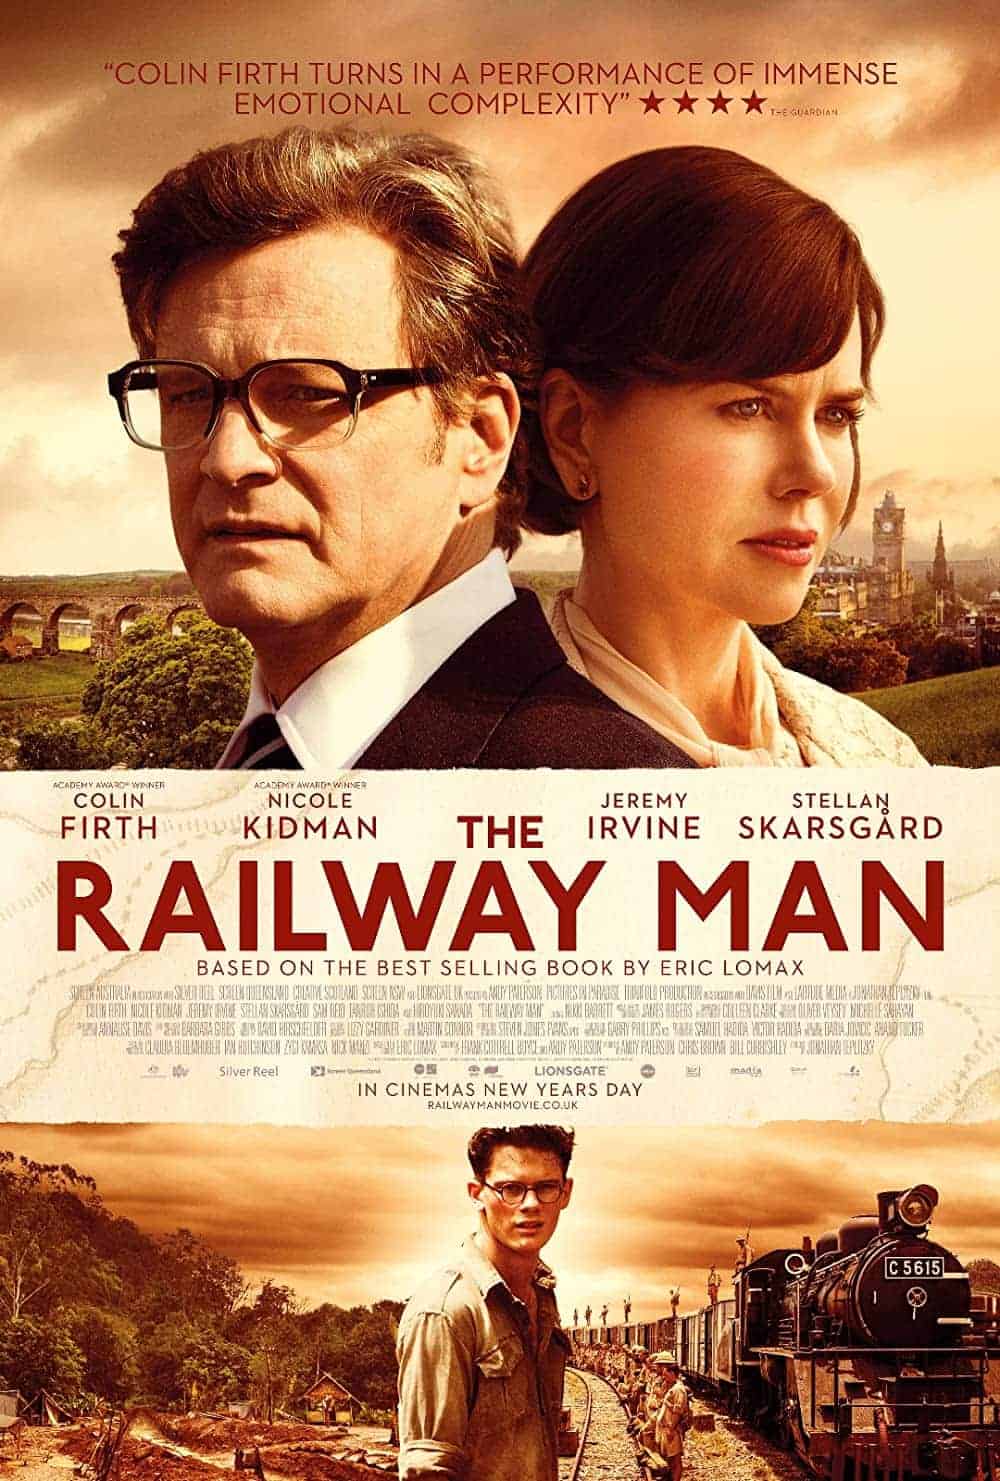 The Railway Man (2013) Best Nicole Kidman Movies (Ranked)